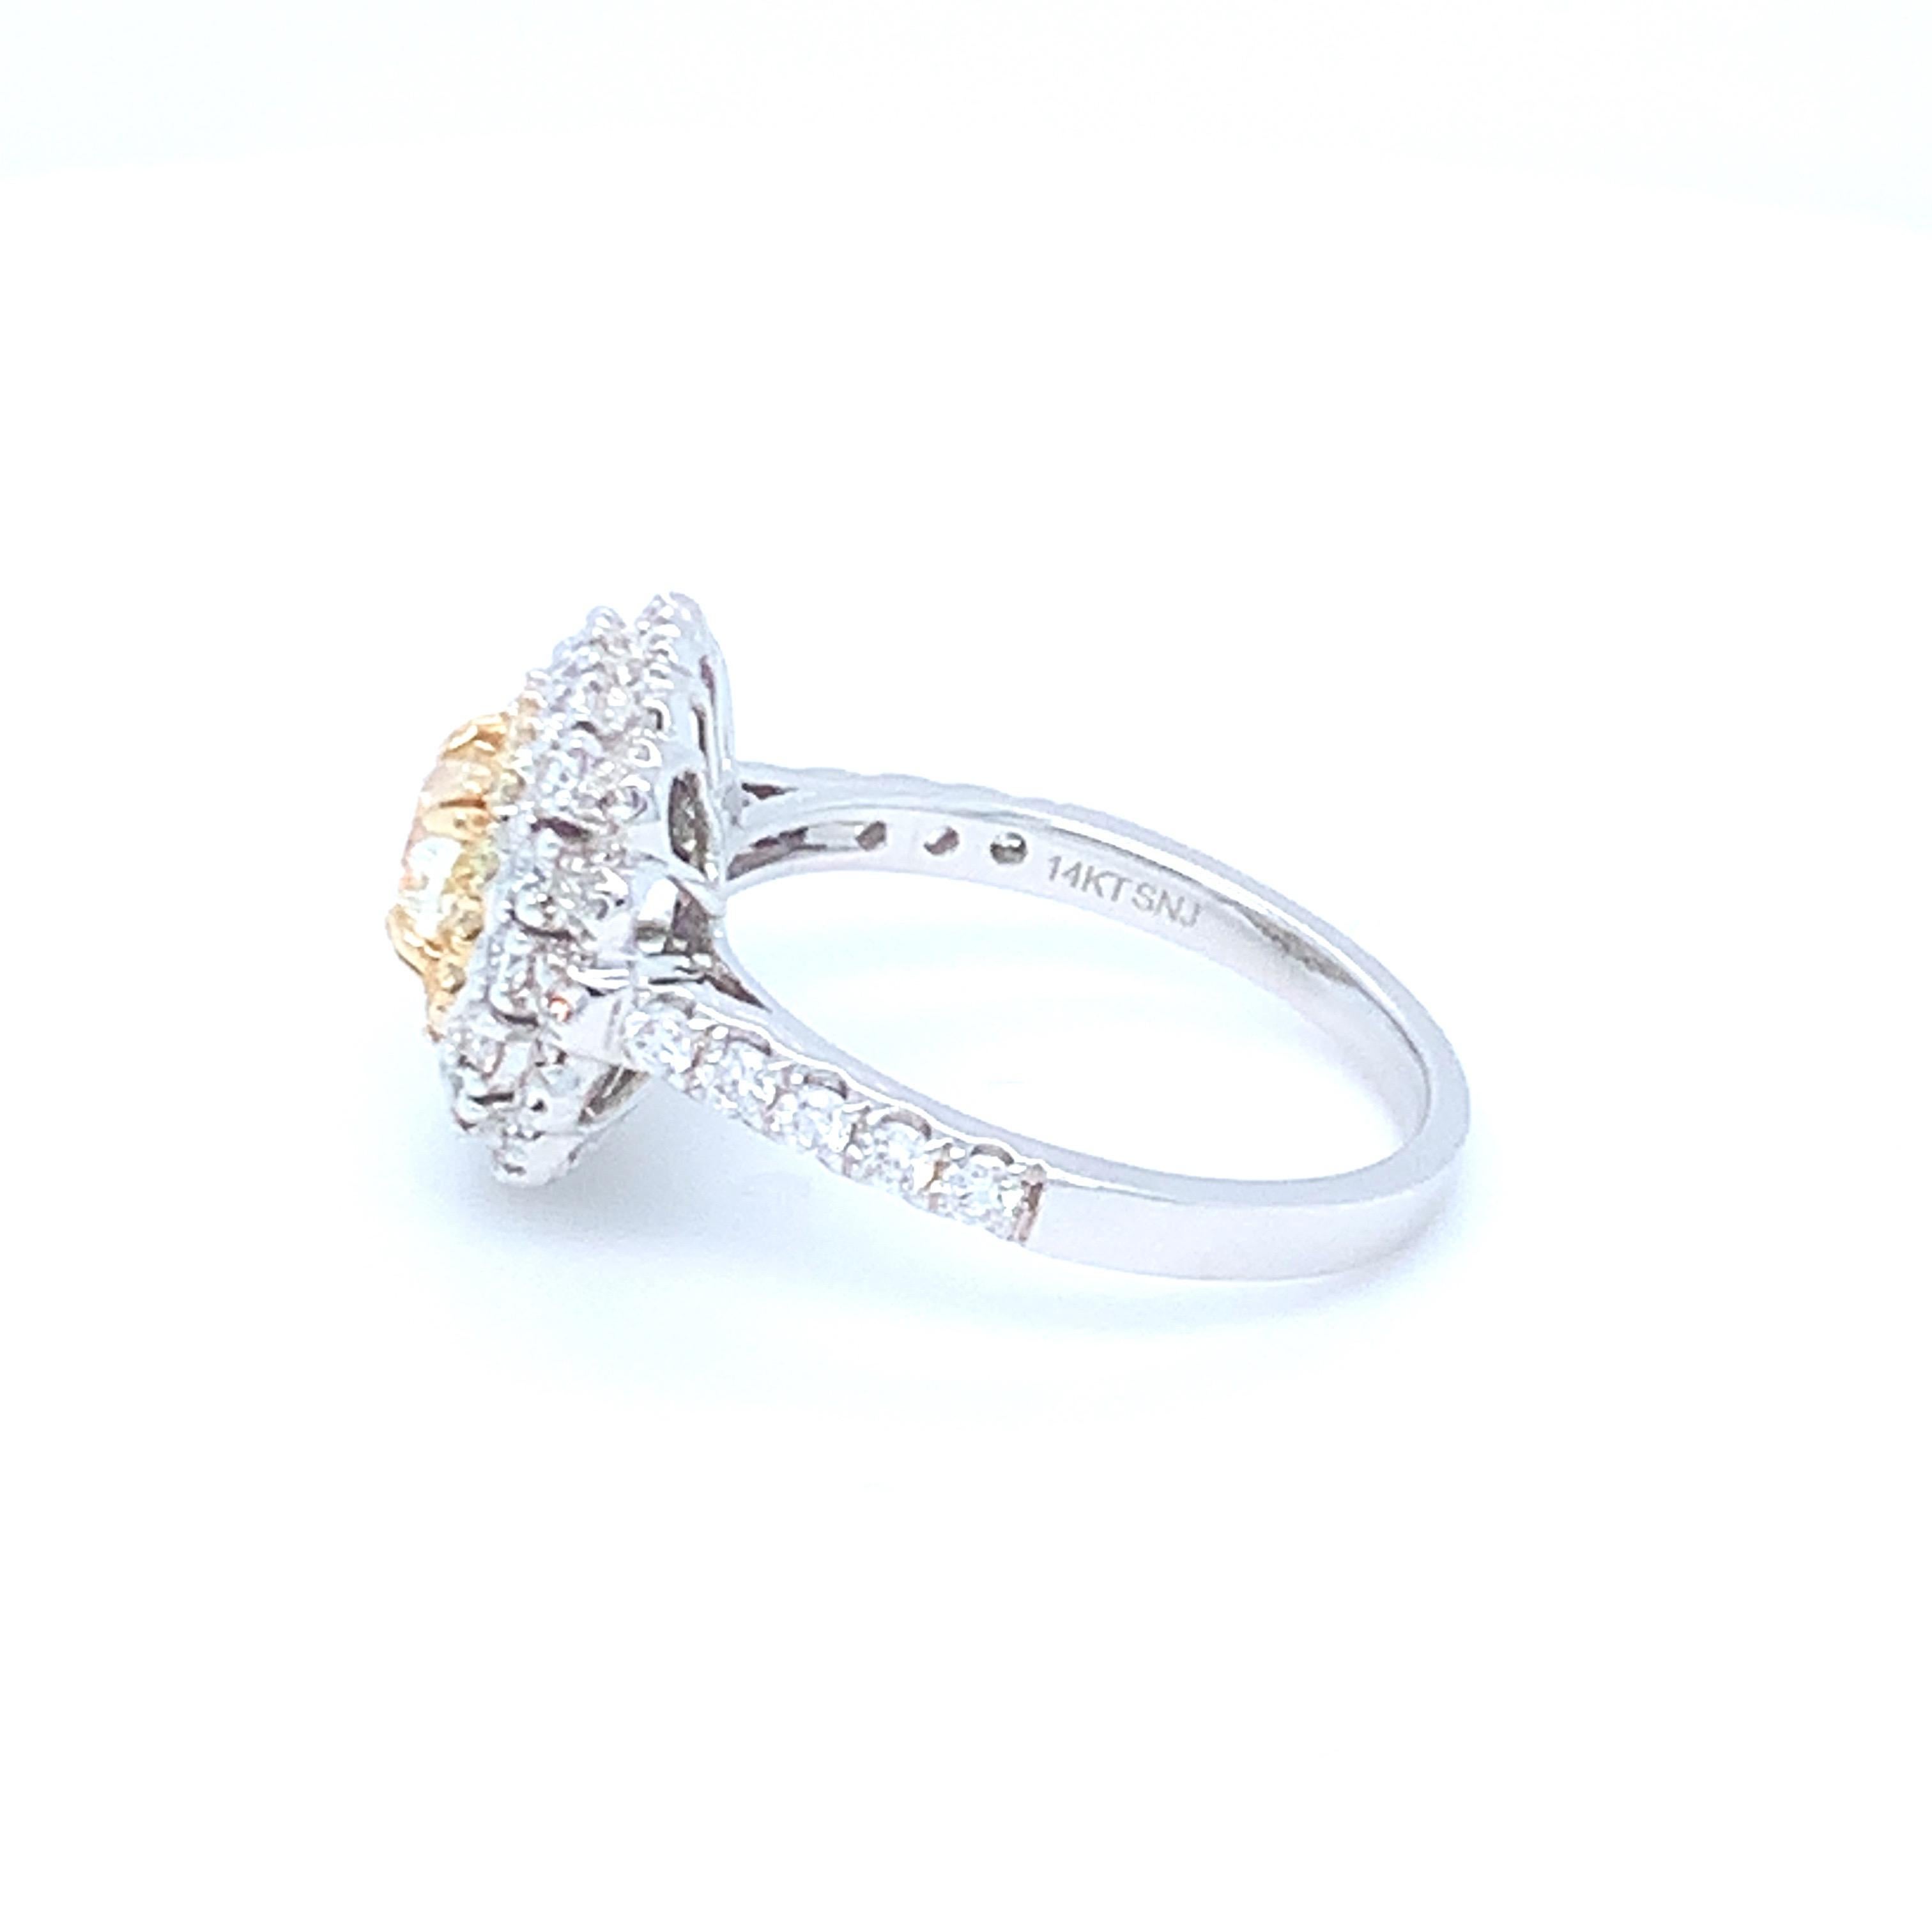 0.69 Carat Cushion Yellow Diamond White Diamond Halo Ring Set in 14 Karat Gold For Sale 3